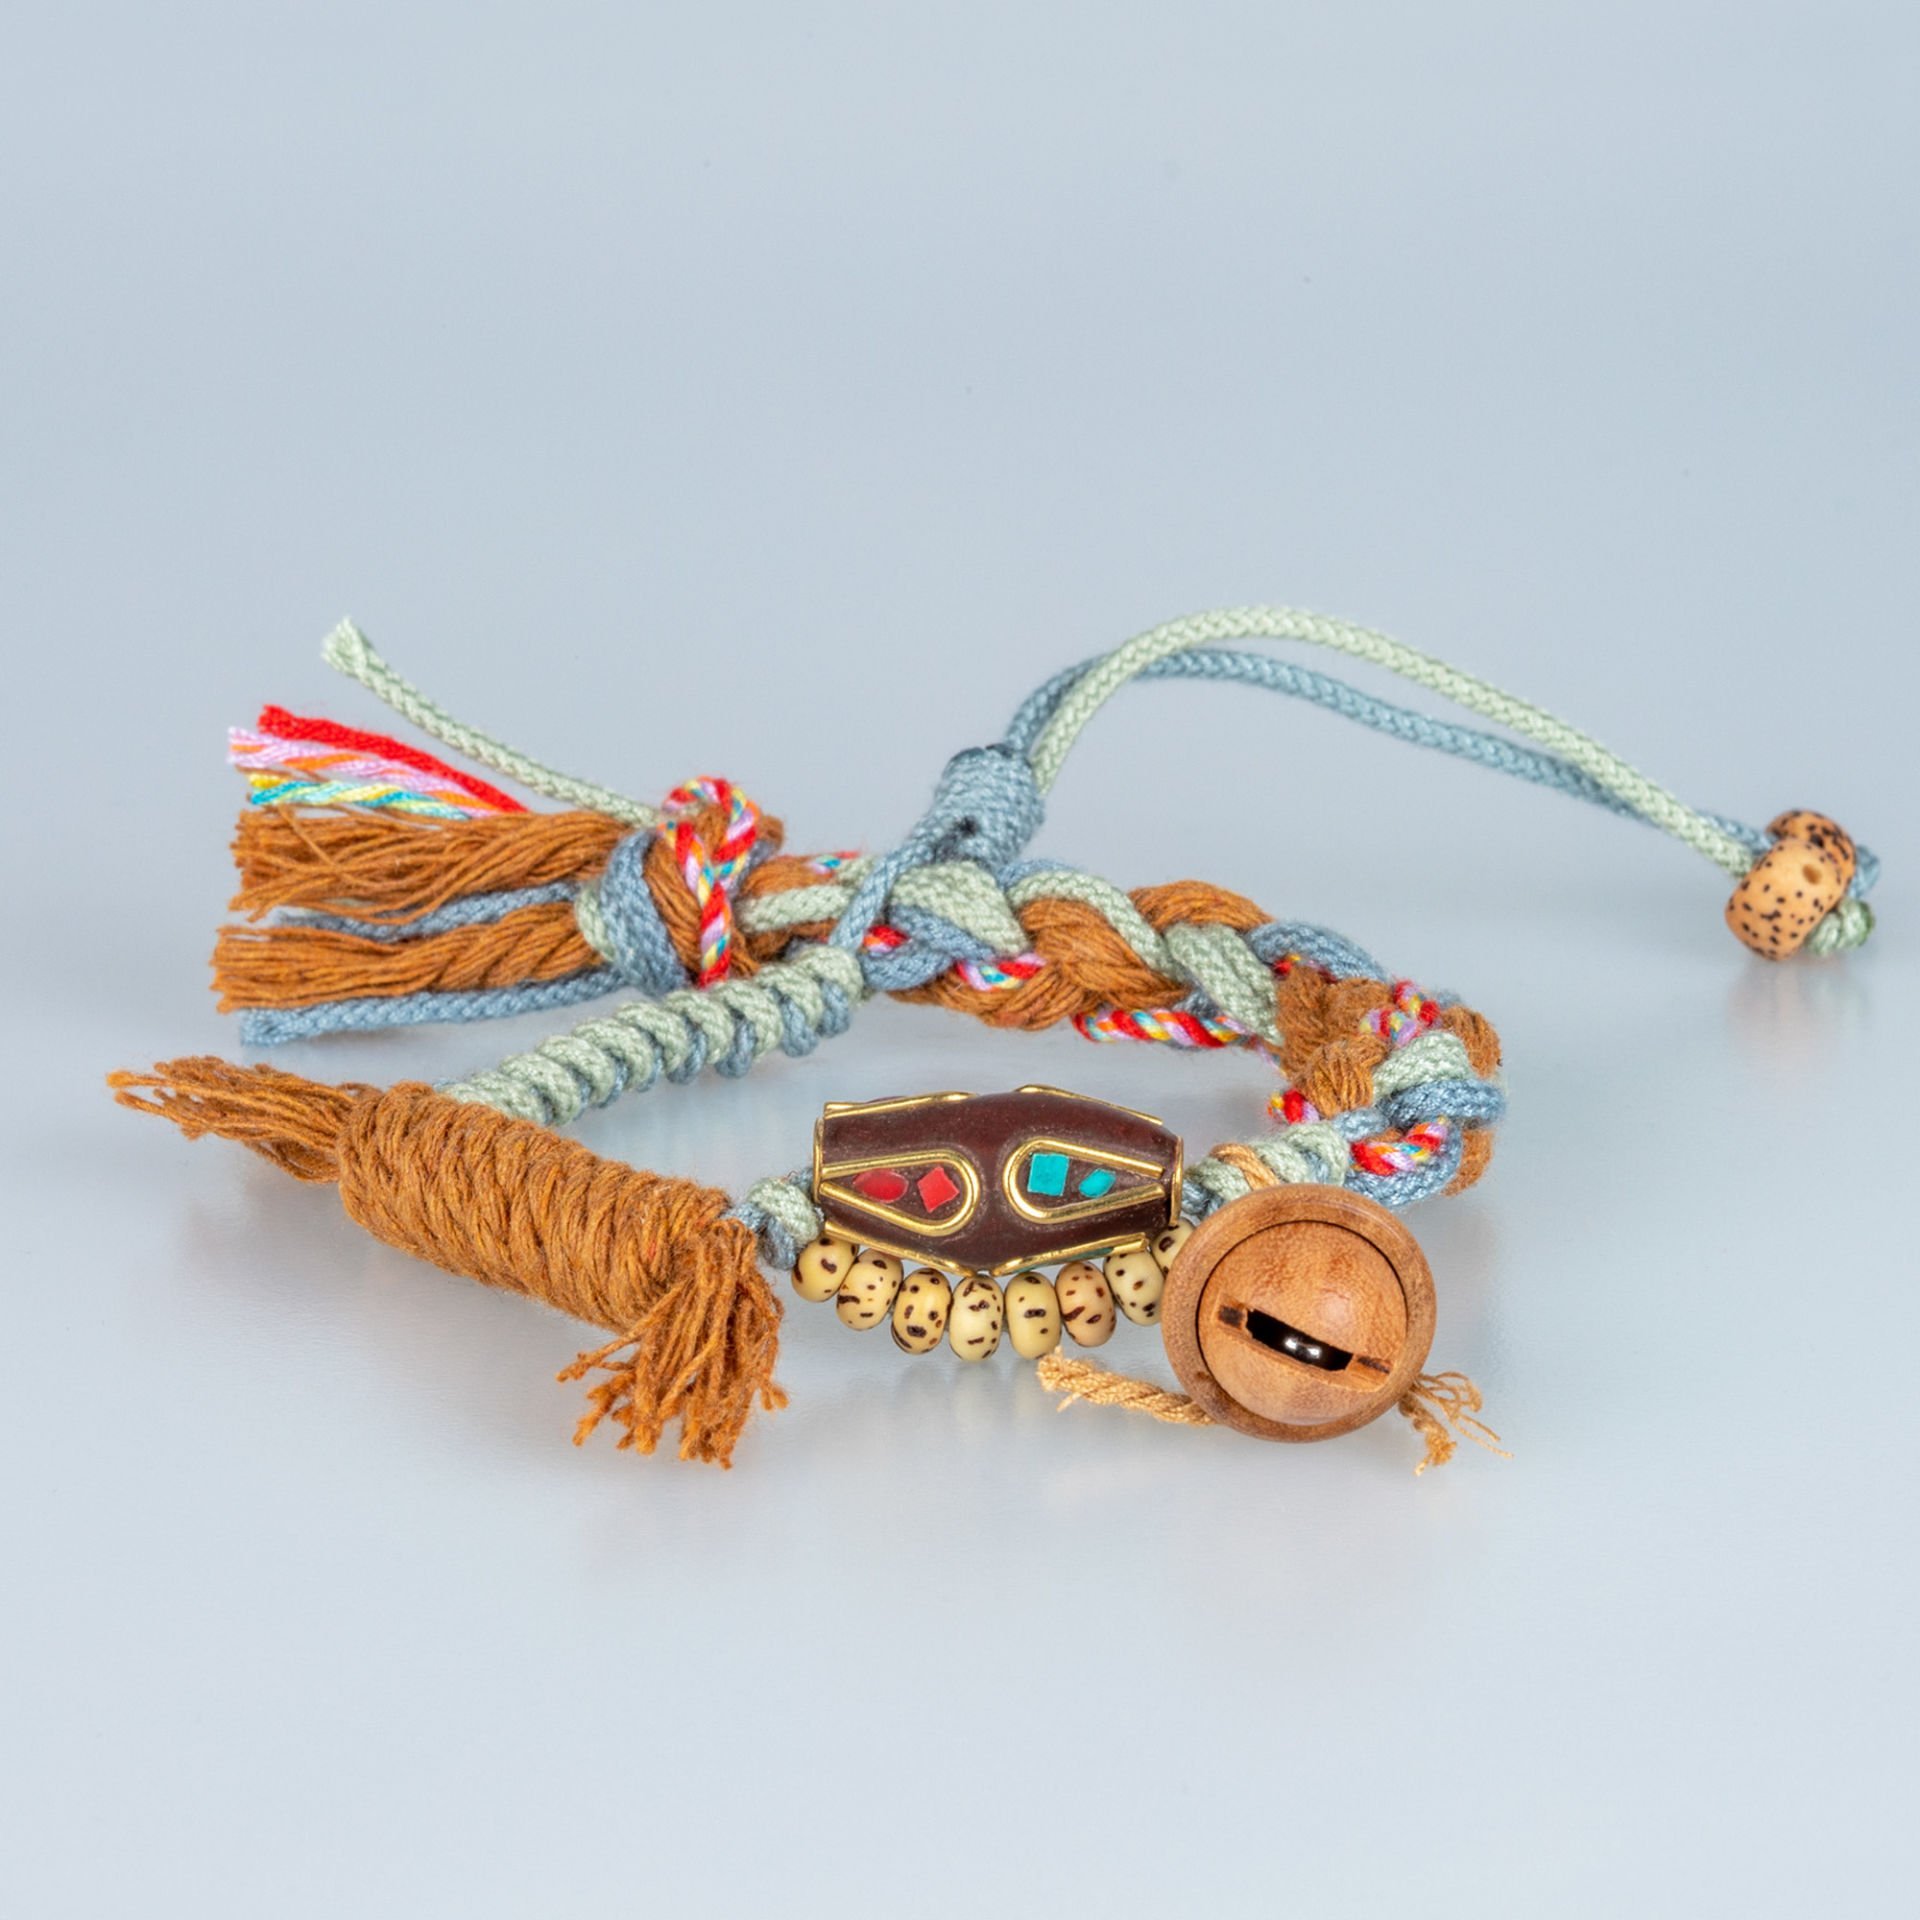 Ethnic Knitted Natural Stone Bracelet